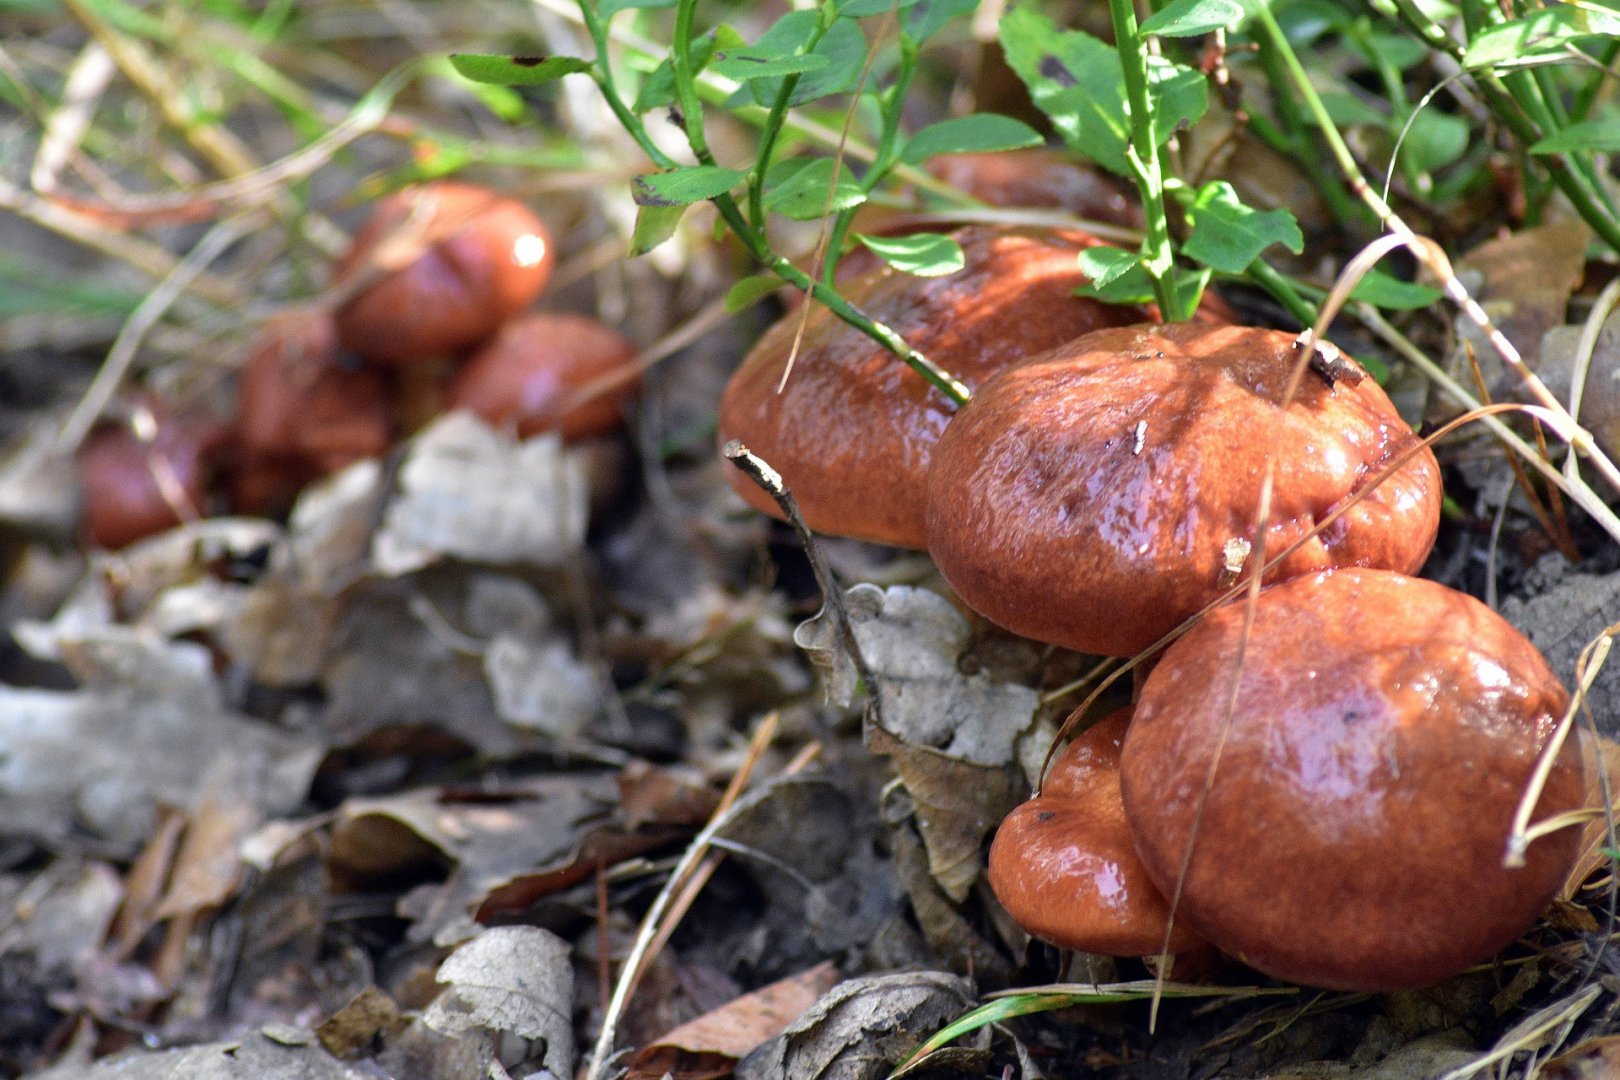 Mushroom picking in Poland